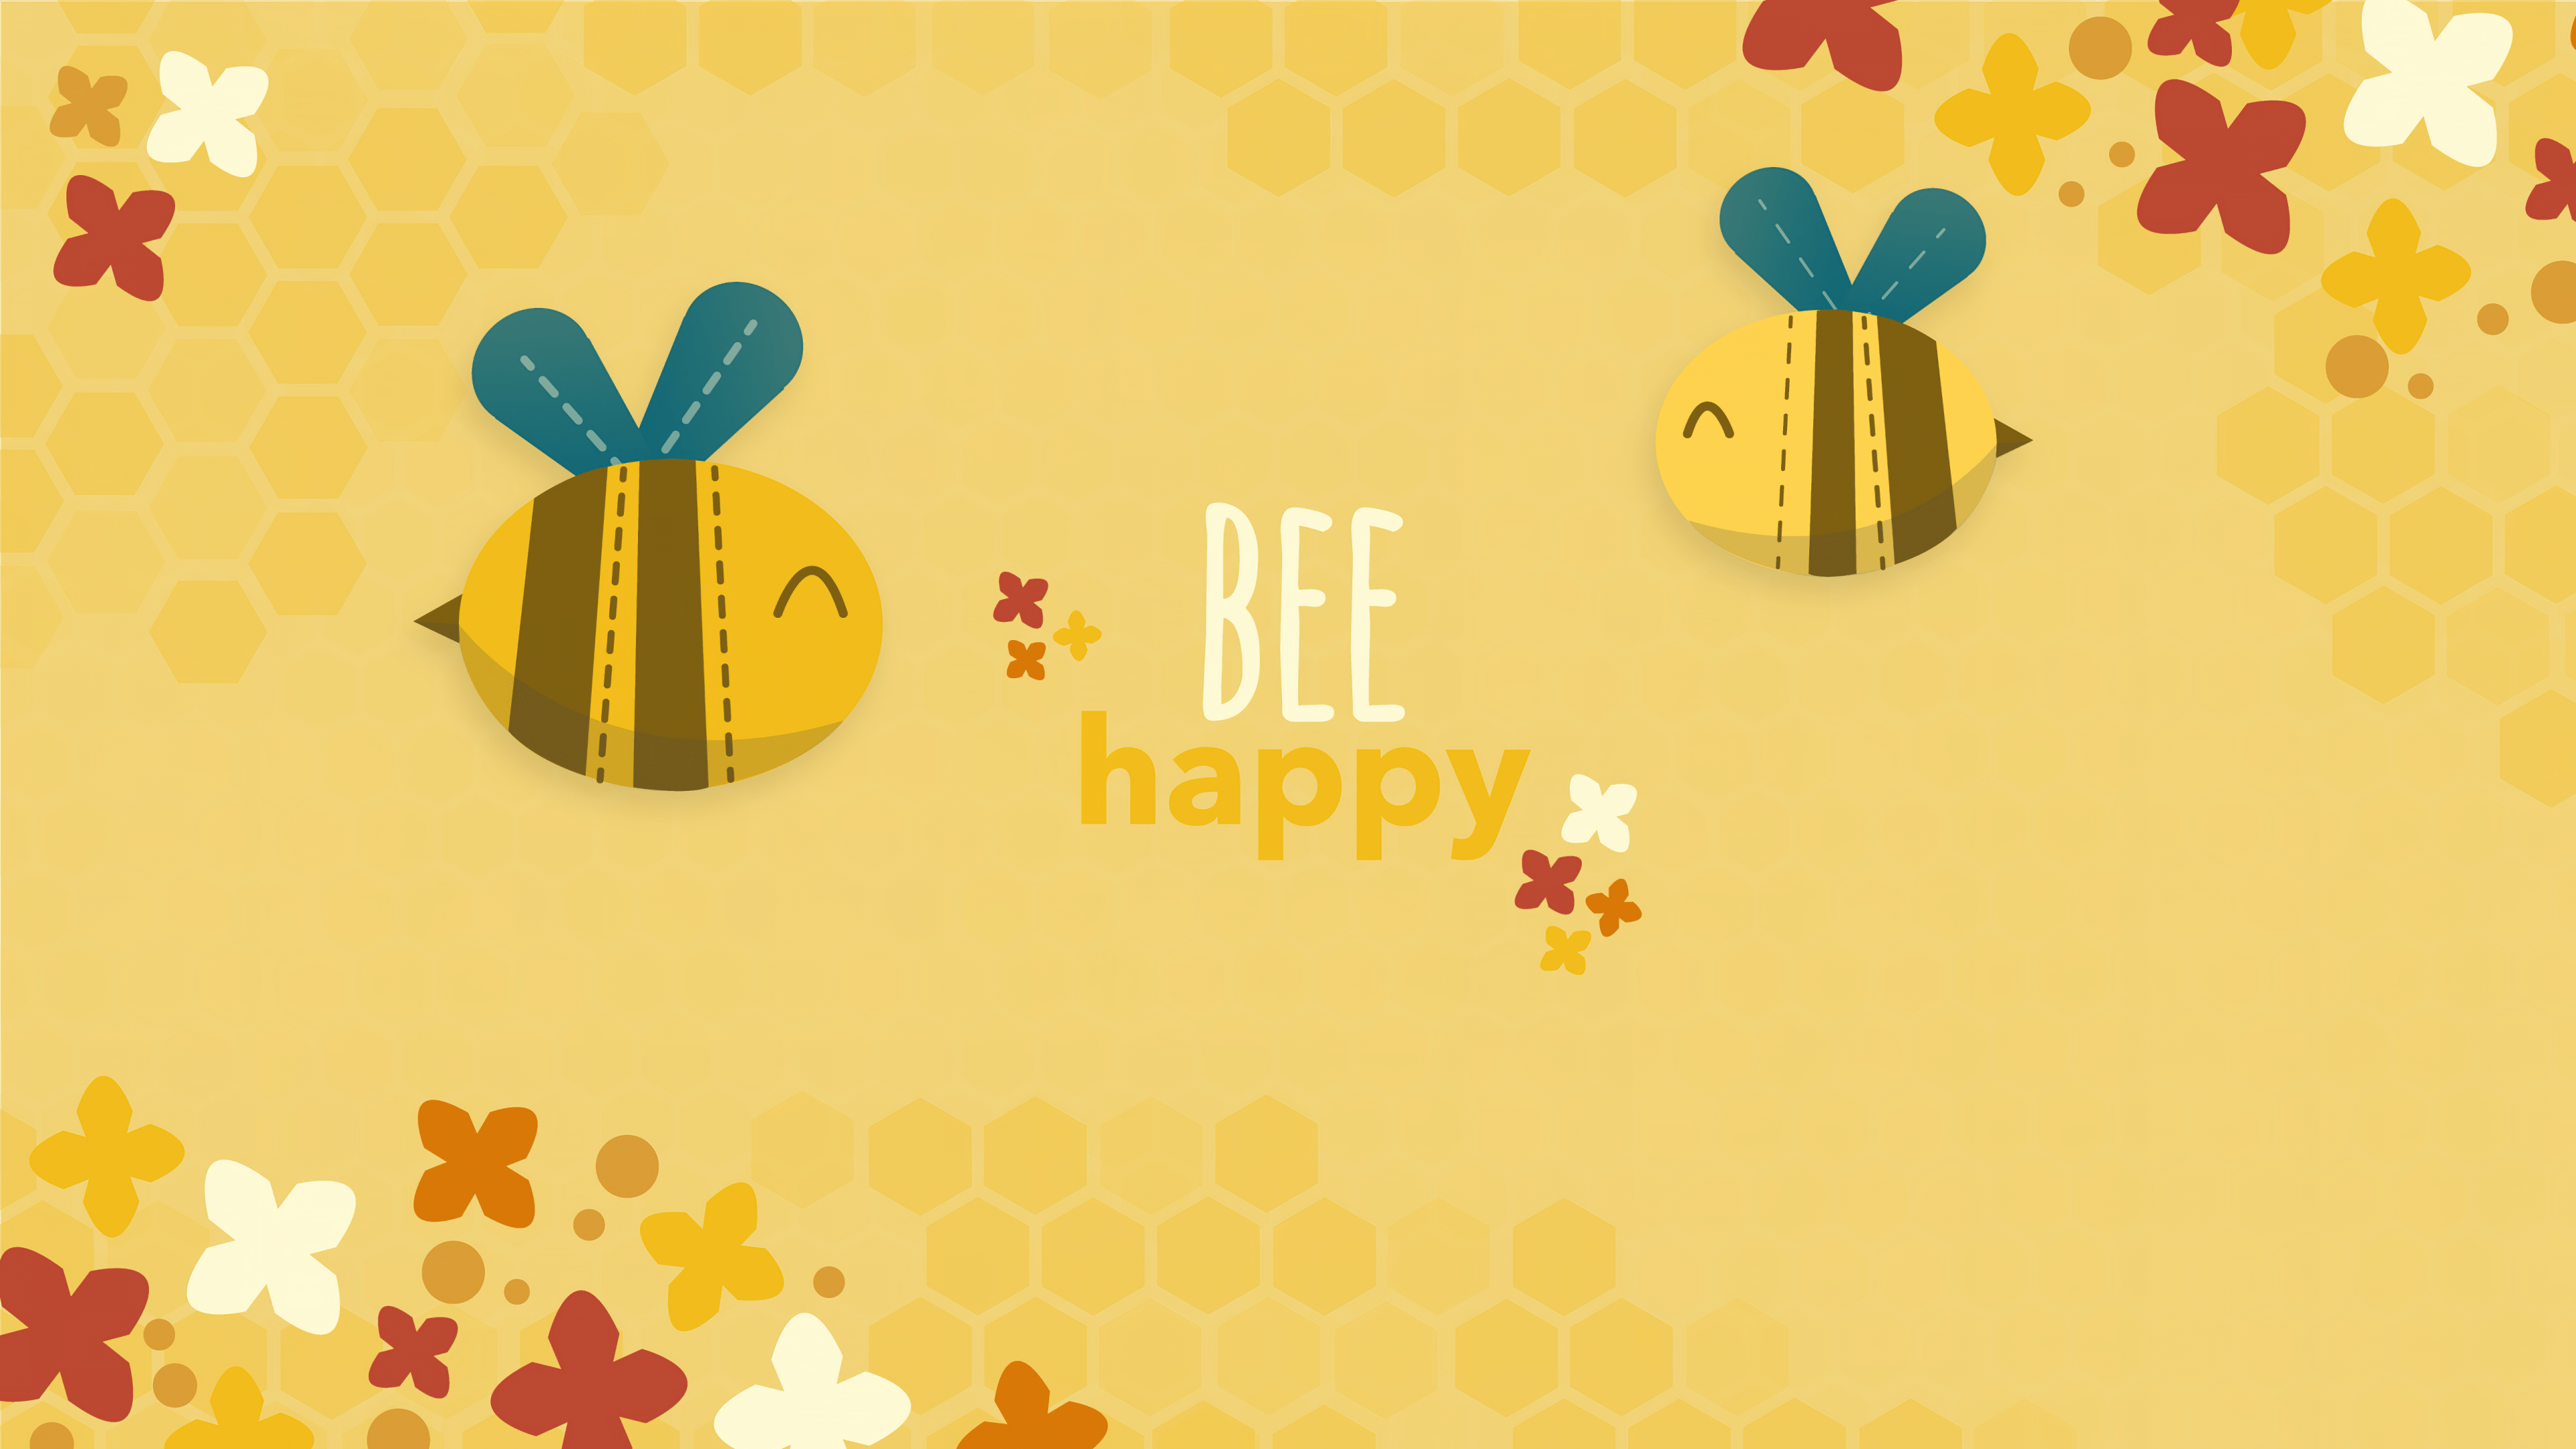 Bee happy Wallpaper 4K, Yellow aesthetic, Illustration